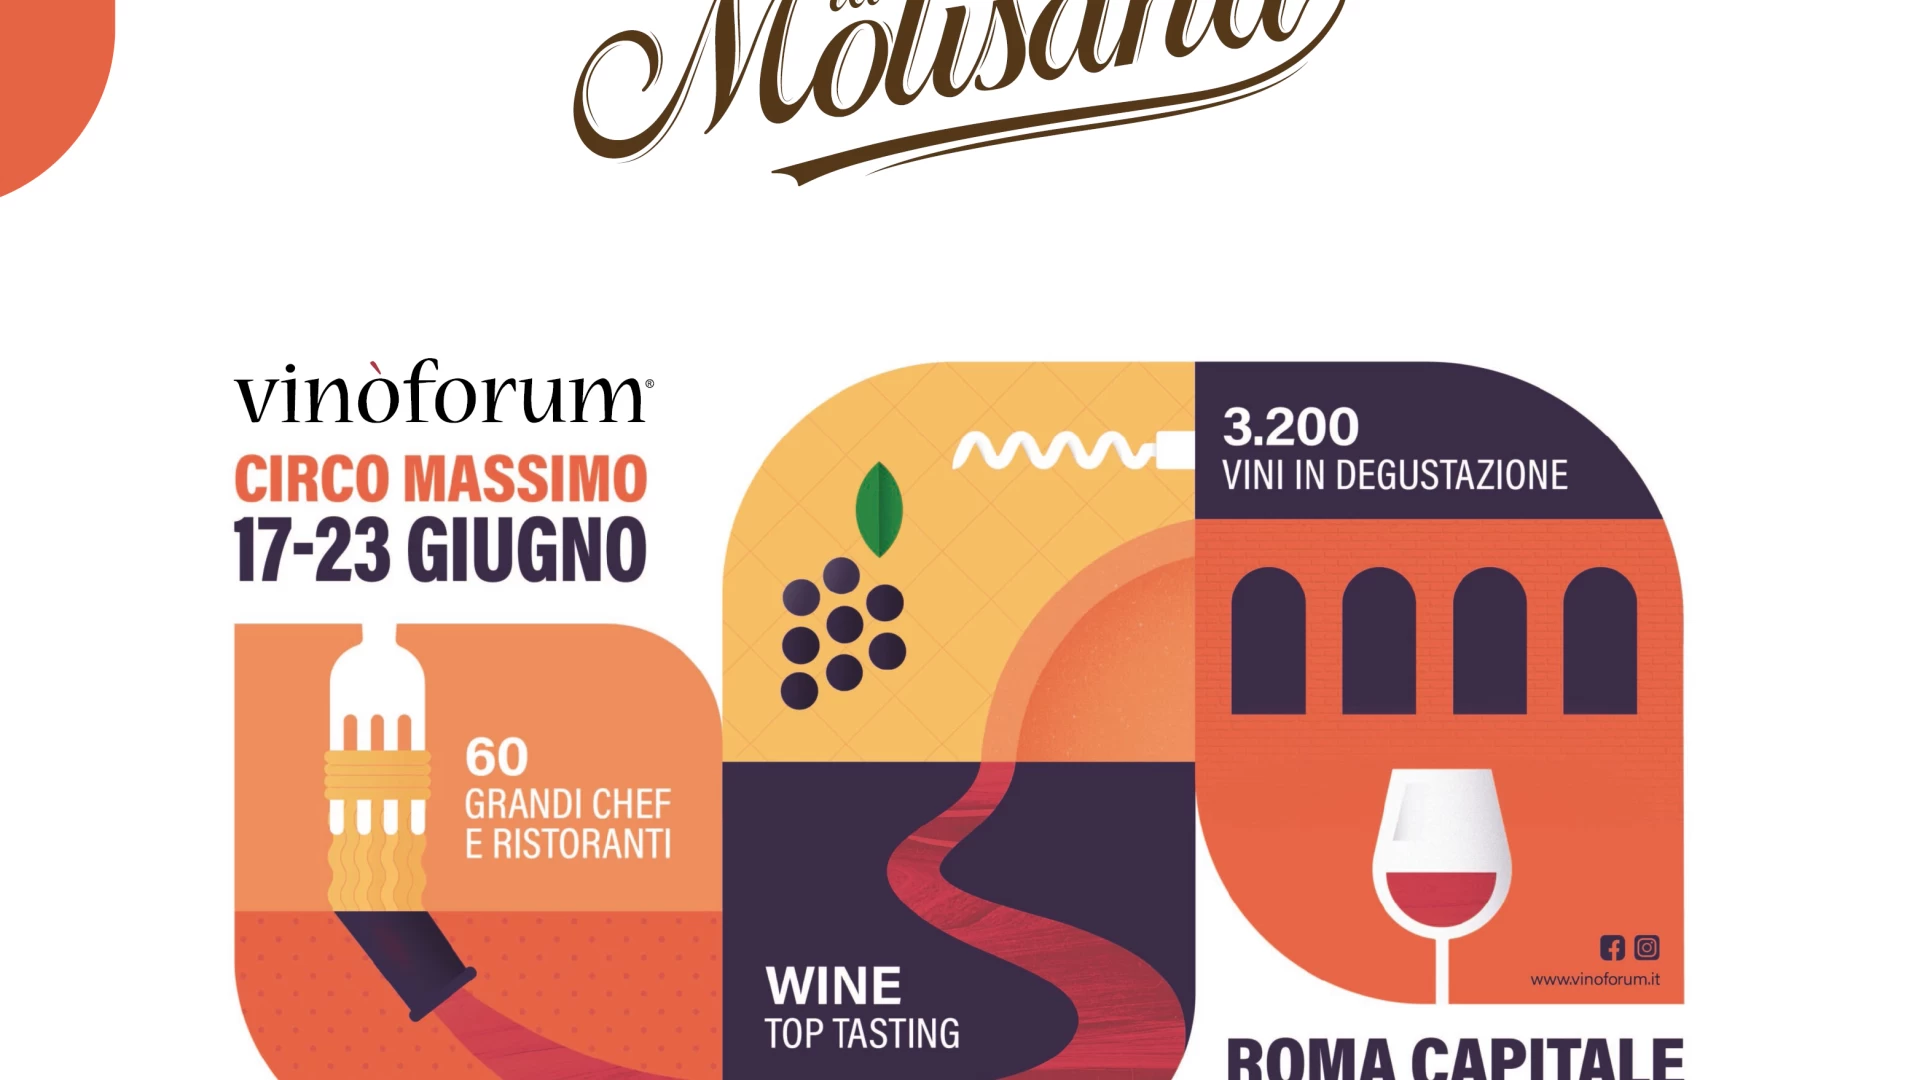 Vinoforum al Circo Massimo dal 17 al 23 giugno prossimi. Presente "La Molisana".